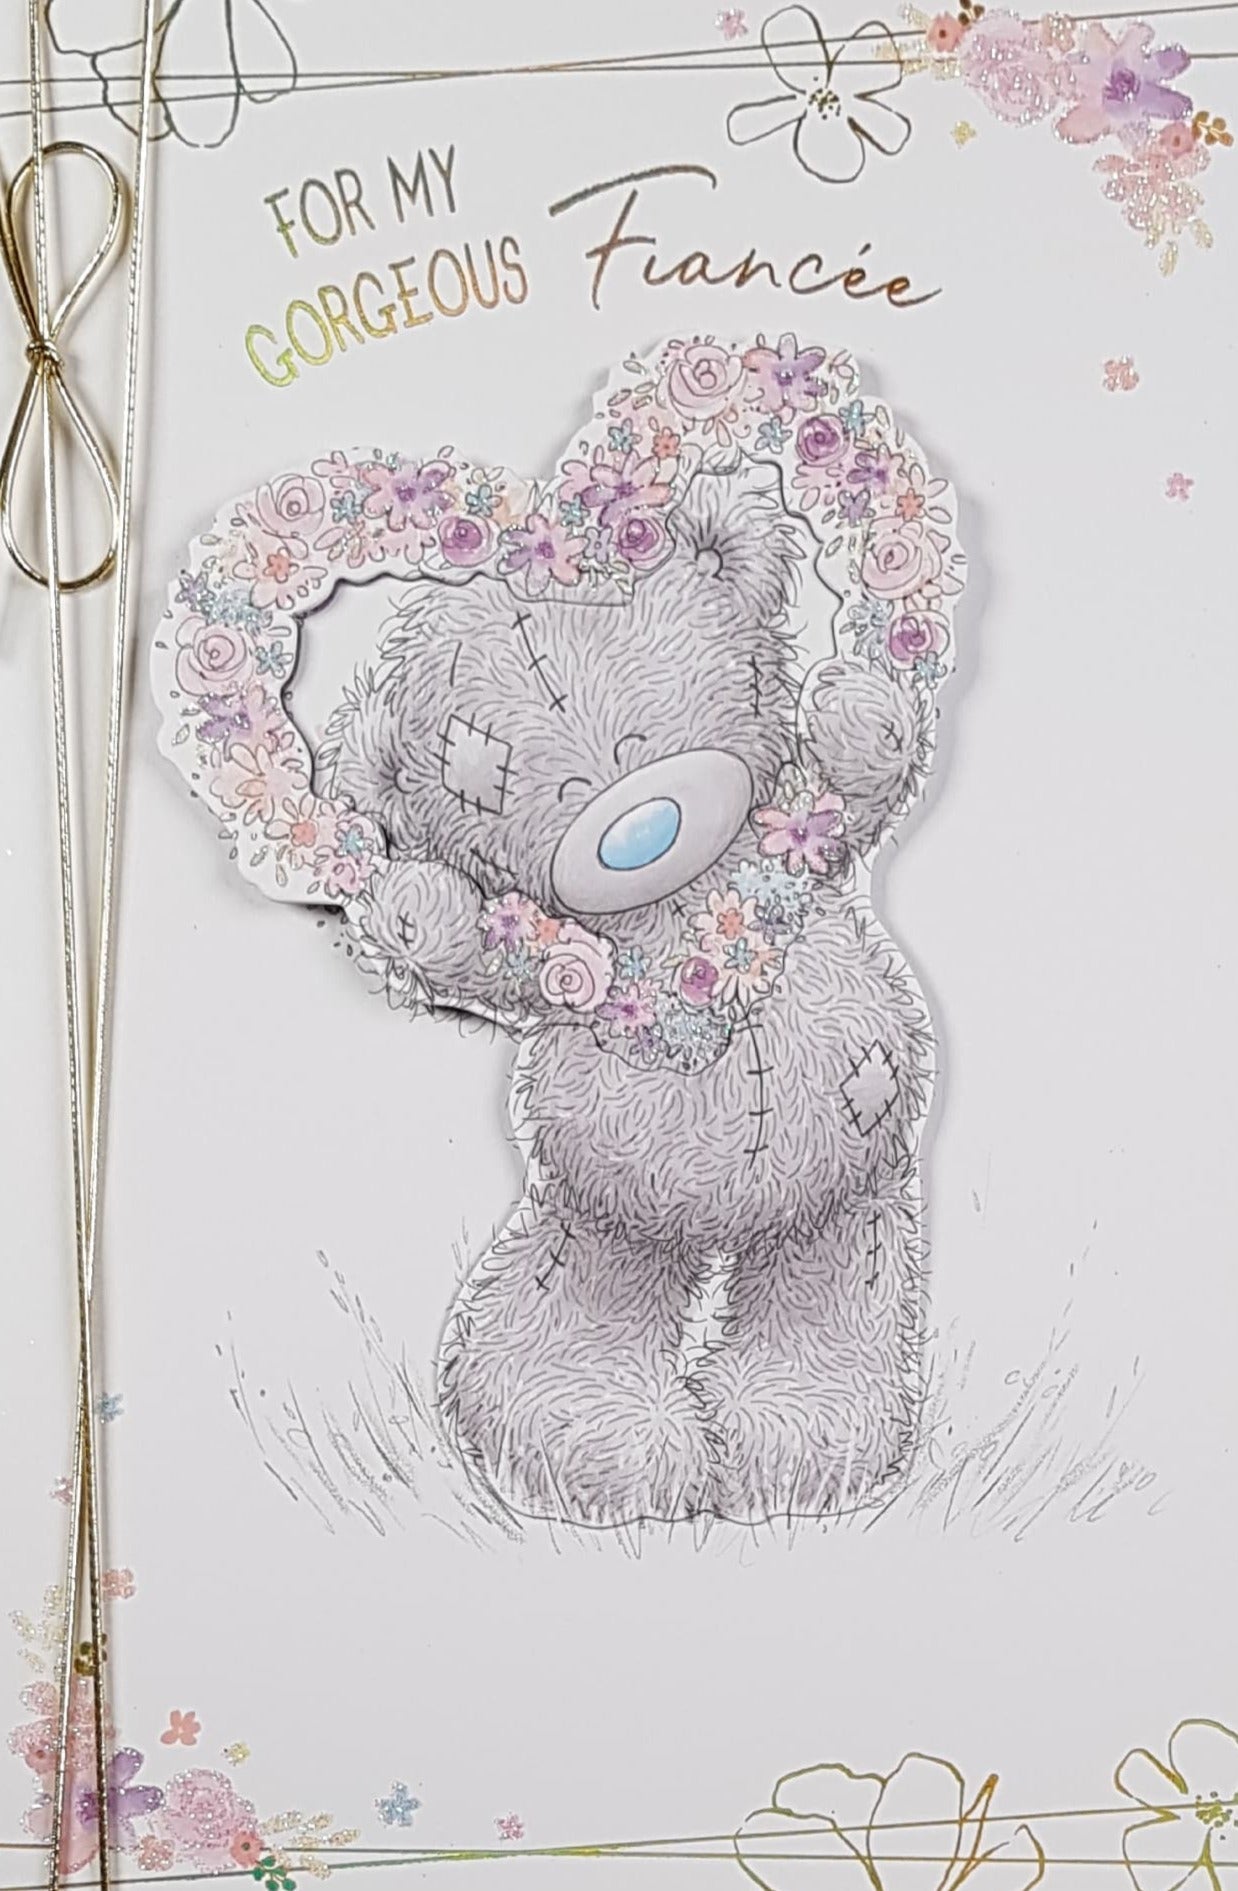 Birthday Card - Fiancee / Teddy Bear Holding Up A Heart Made Of Flowers